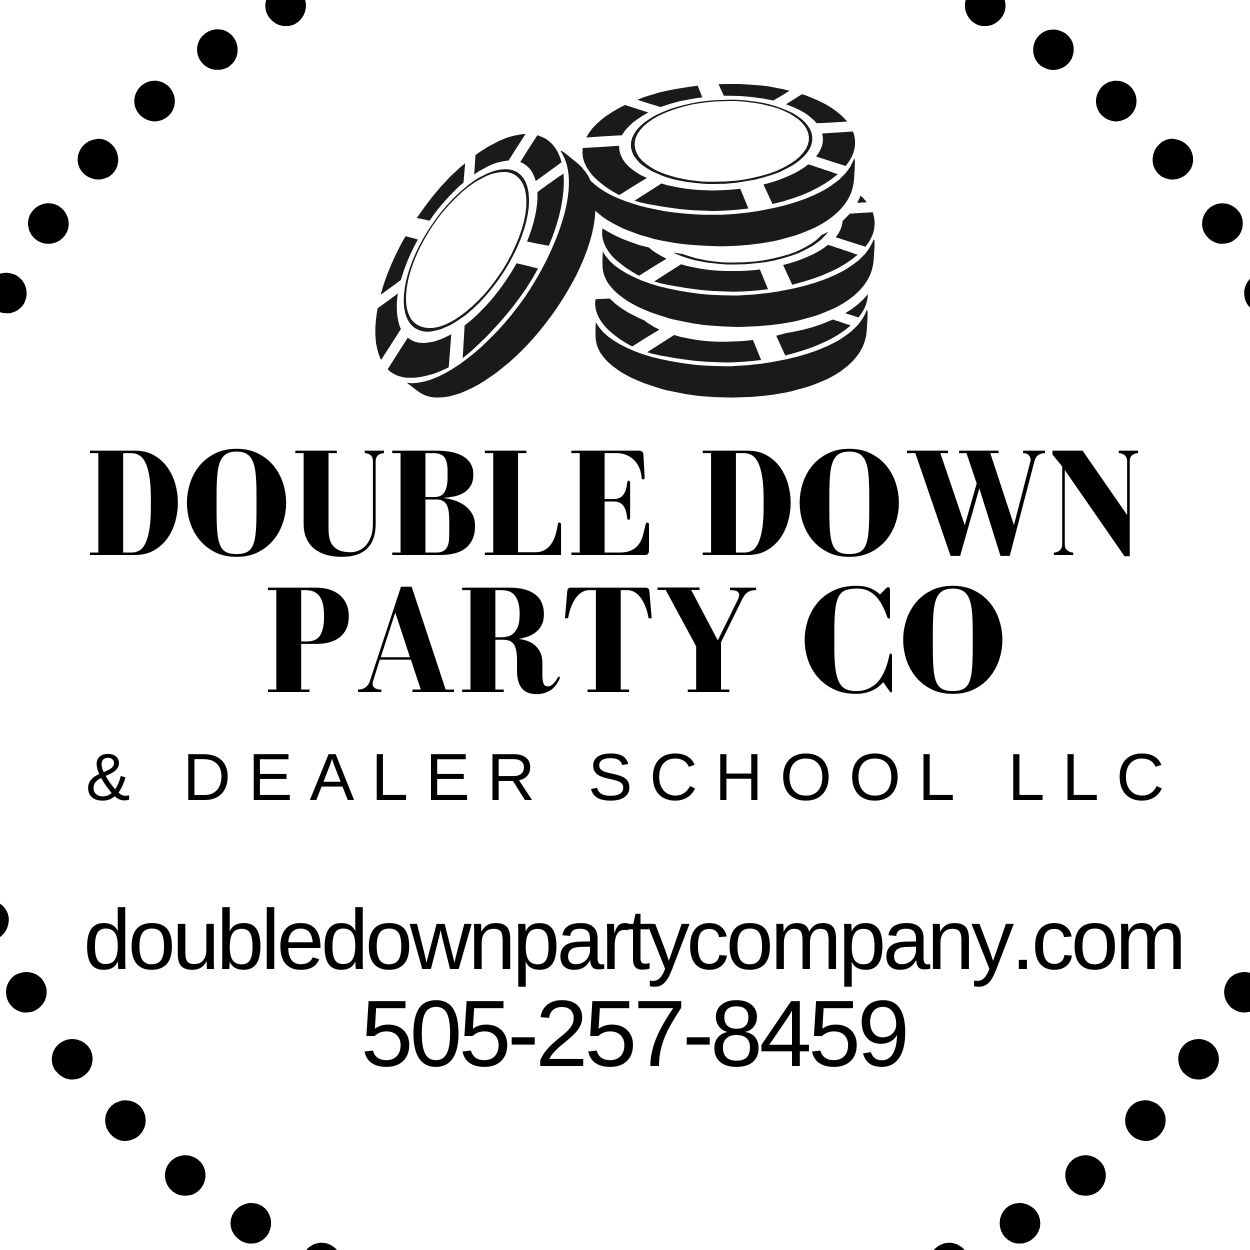 Double Down Party Co & Dealer School LLC